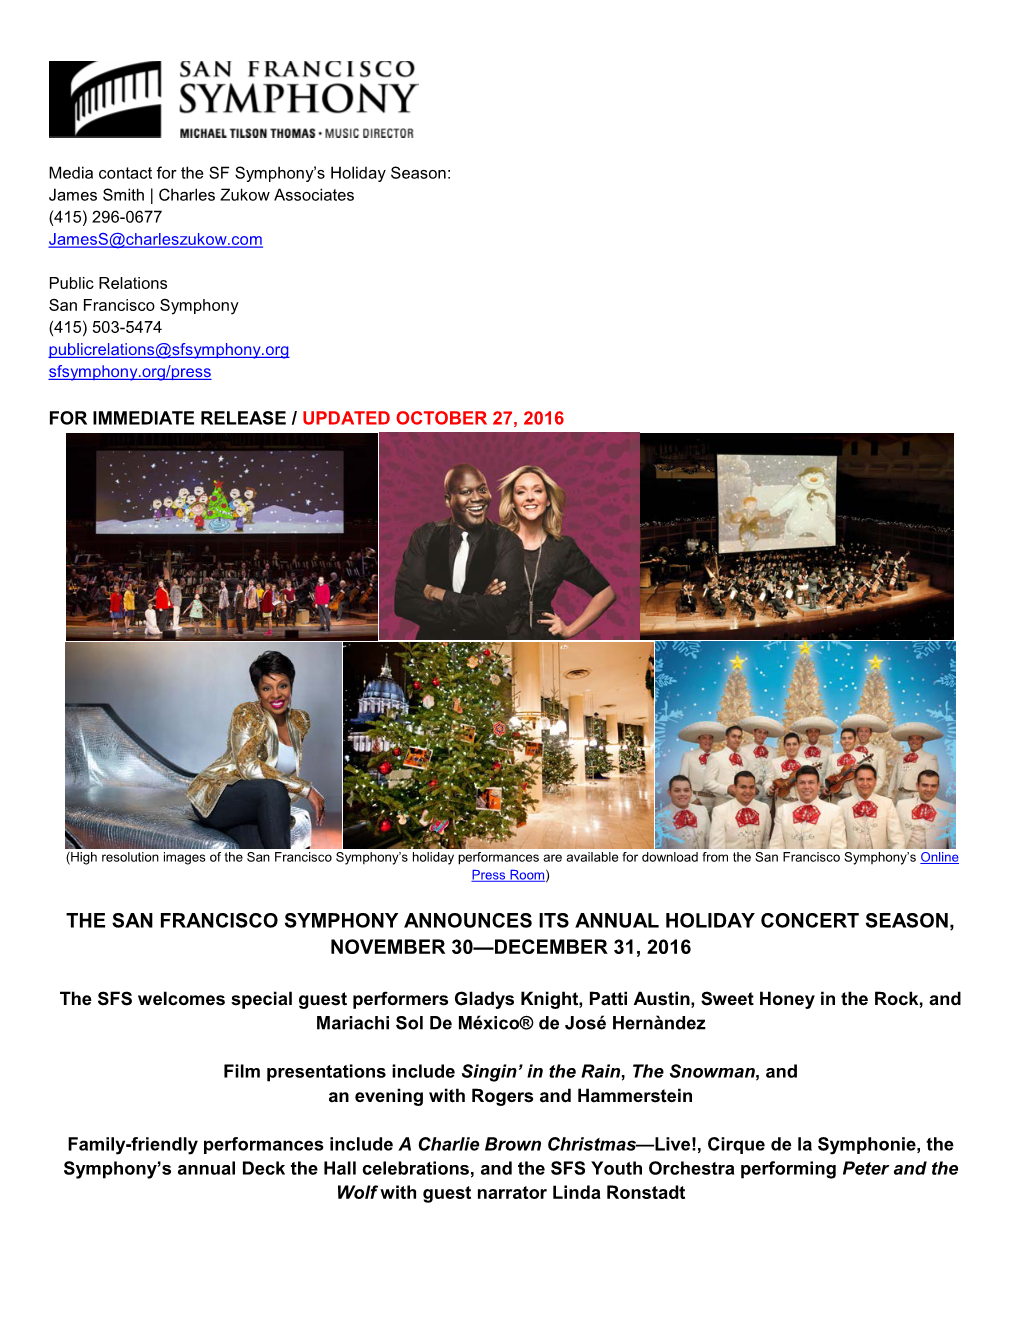 The San Francisco Symphony Announces Its Annual Holiday Concert Season, November 30—December 31, 2016